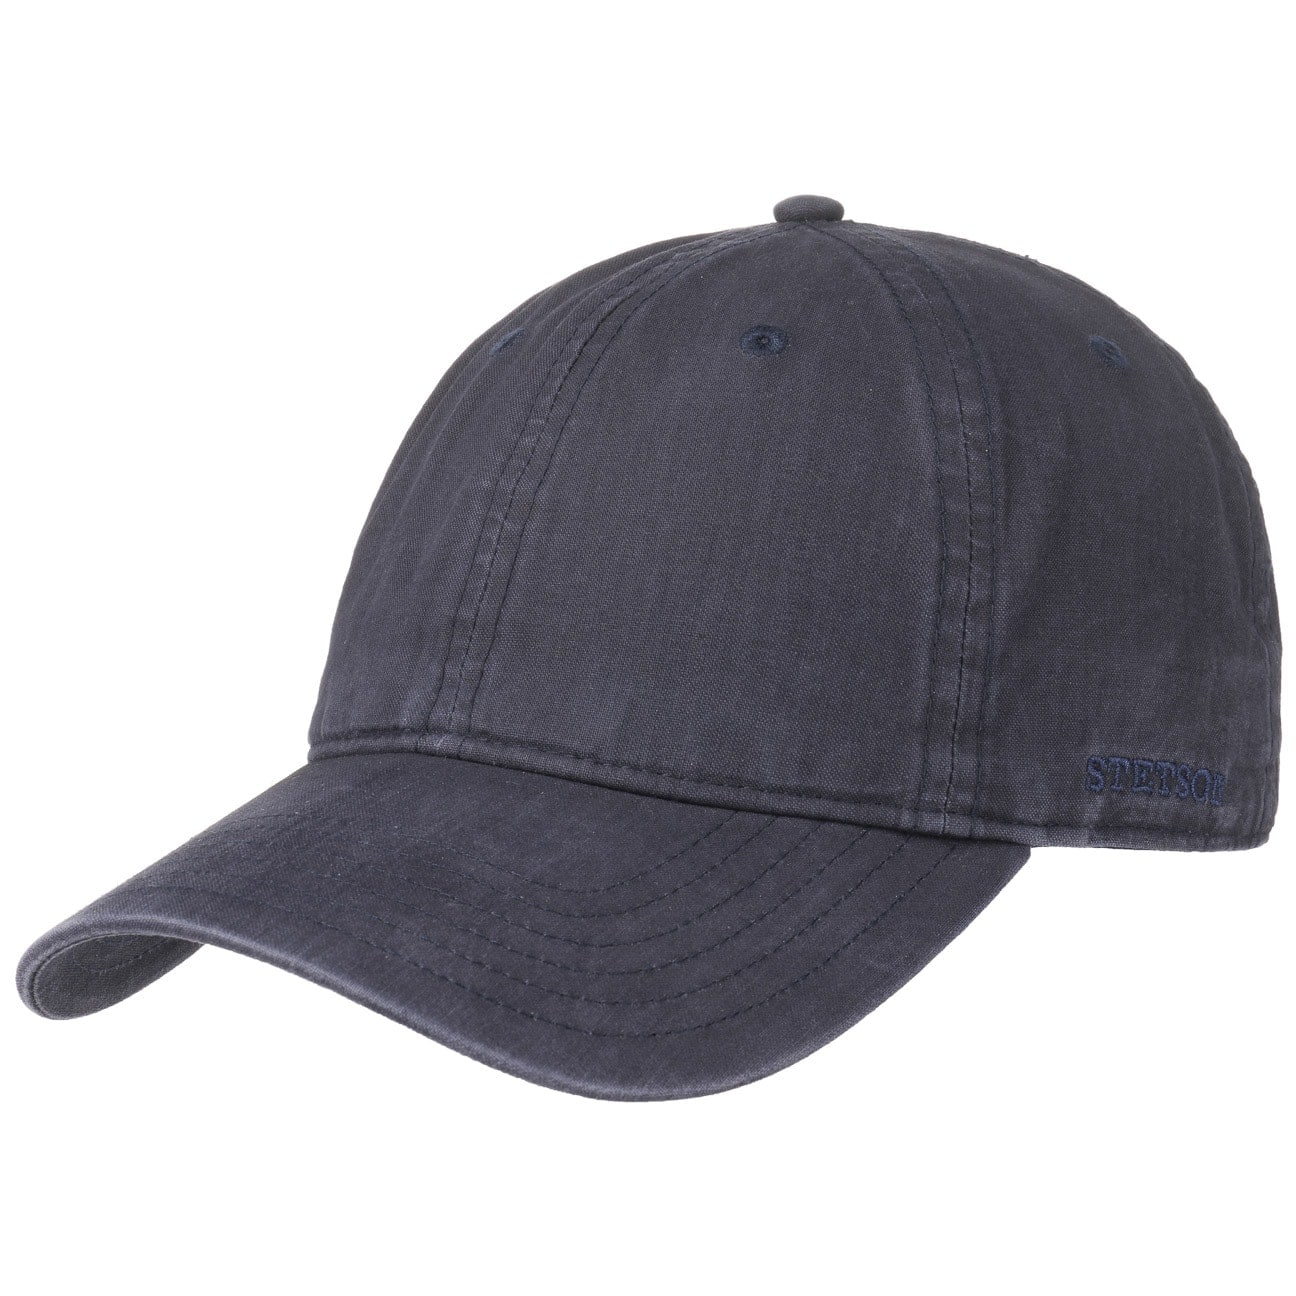 Stetson 7711102-2 Navy Delave baseball cap